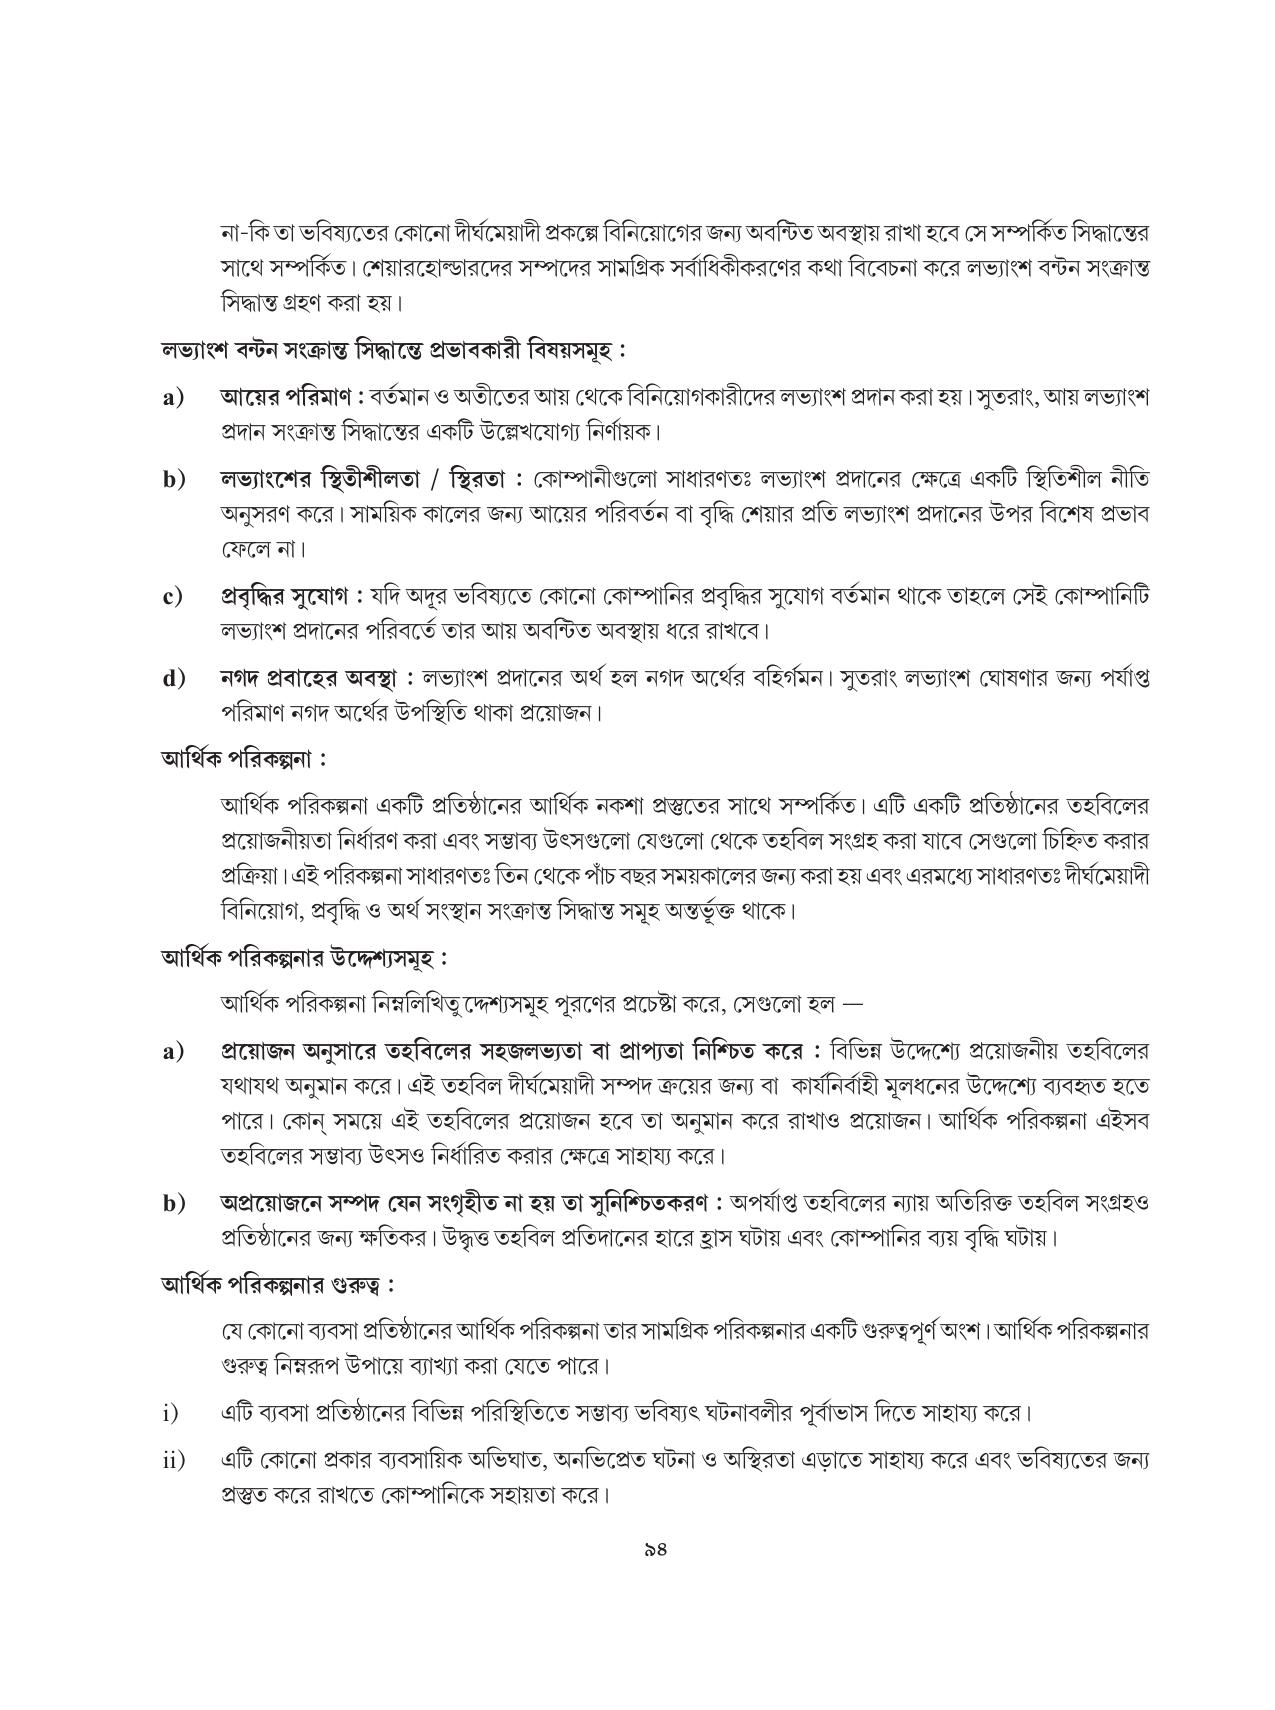 Tripura Board Class 12 Karbari Shastra Bengali Version Workbooks - Page 94